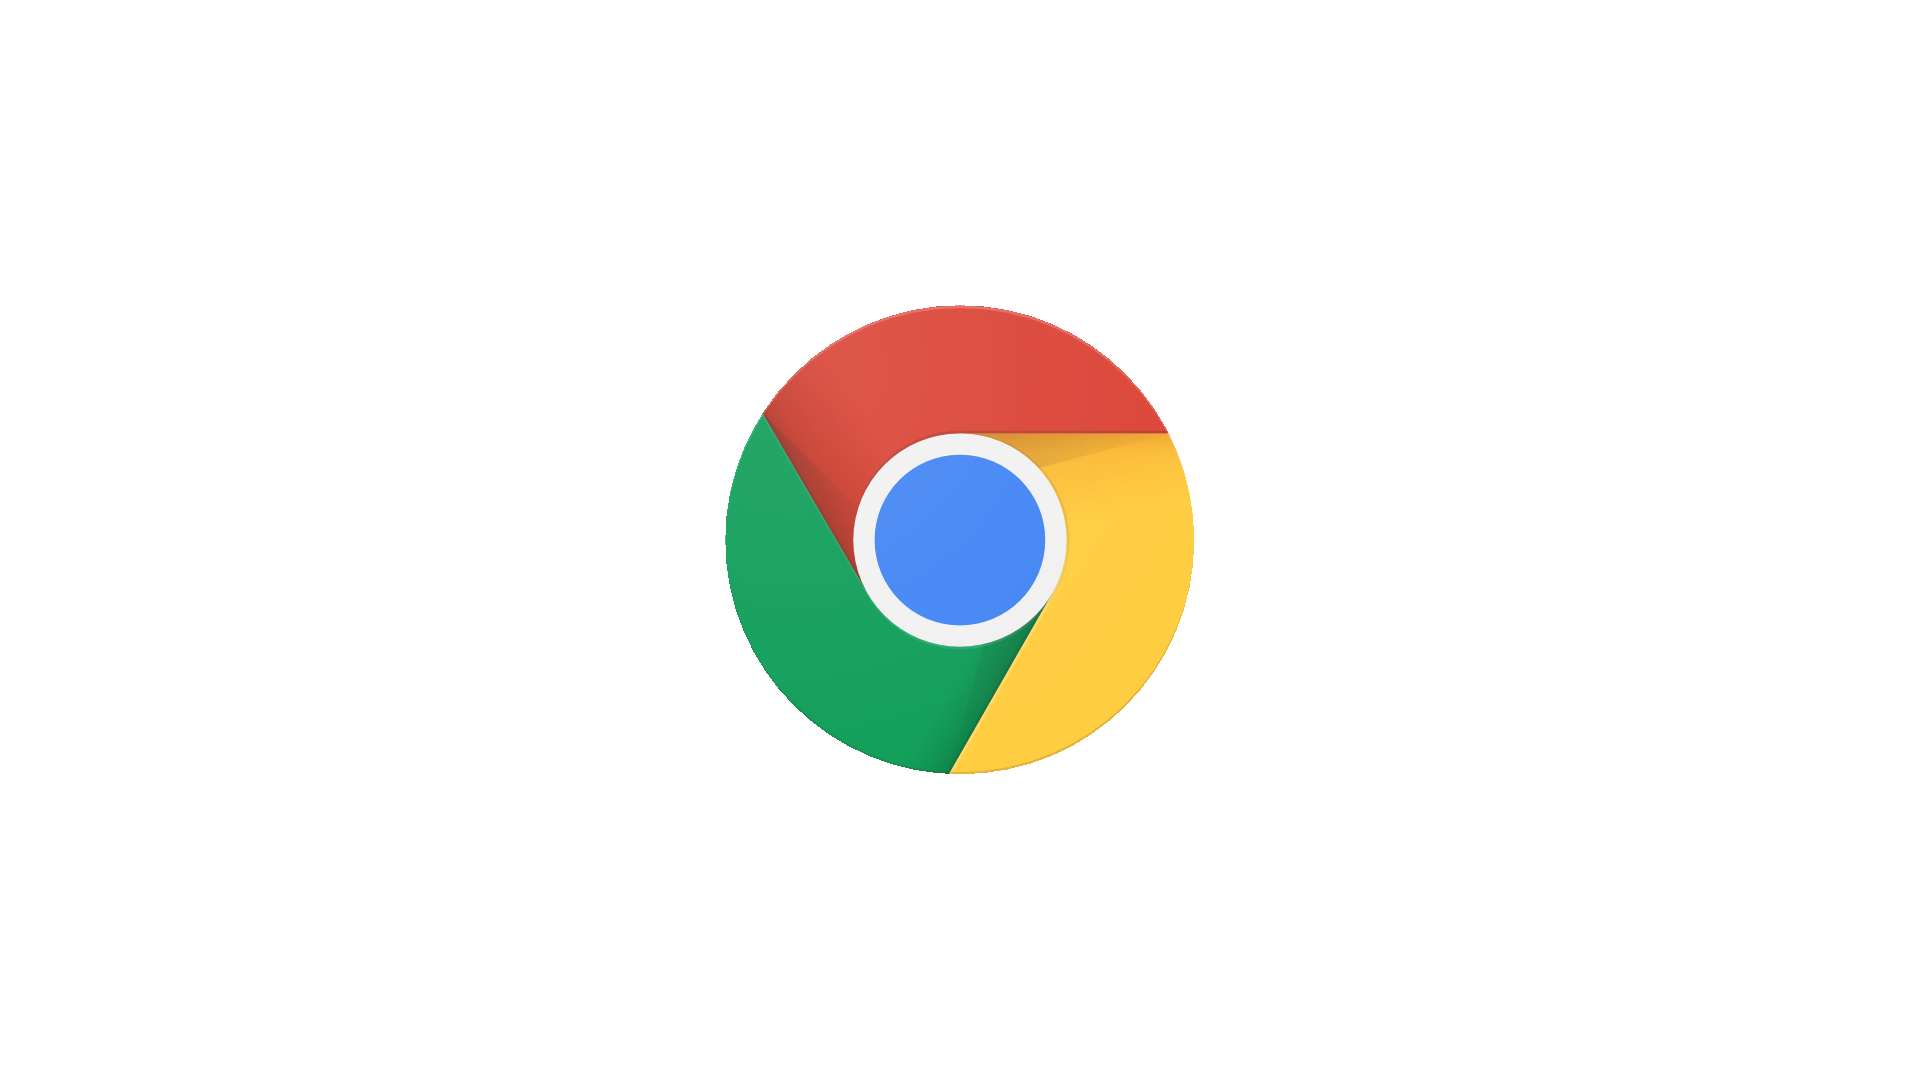 Google Chrome logo as of 14 March 2021